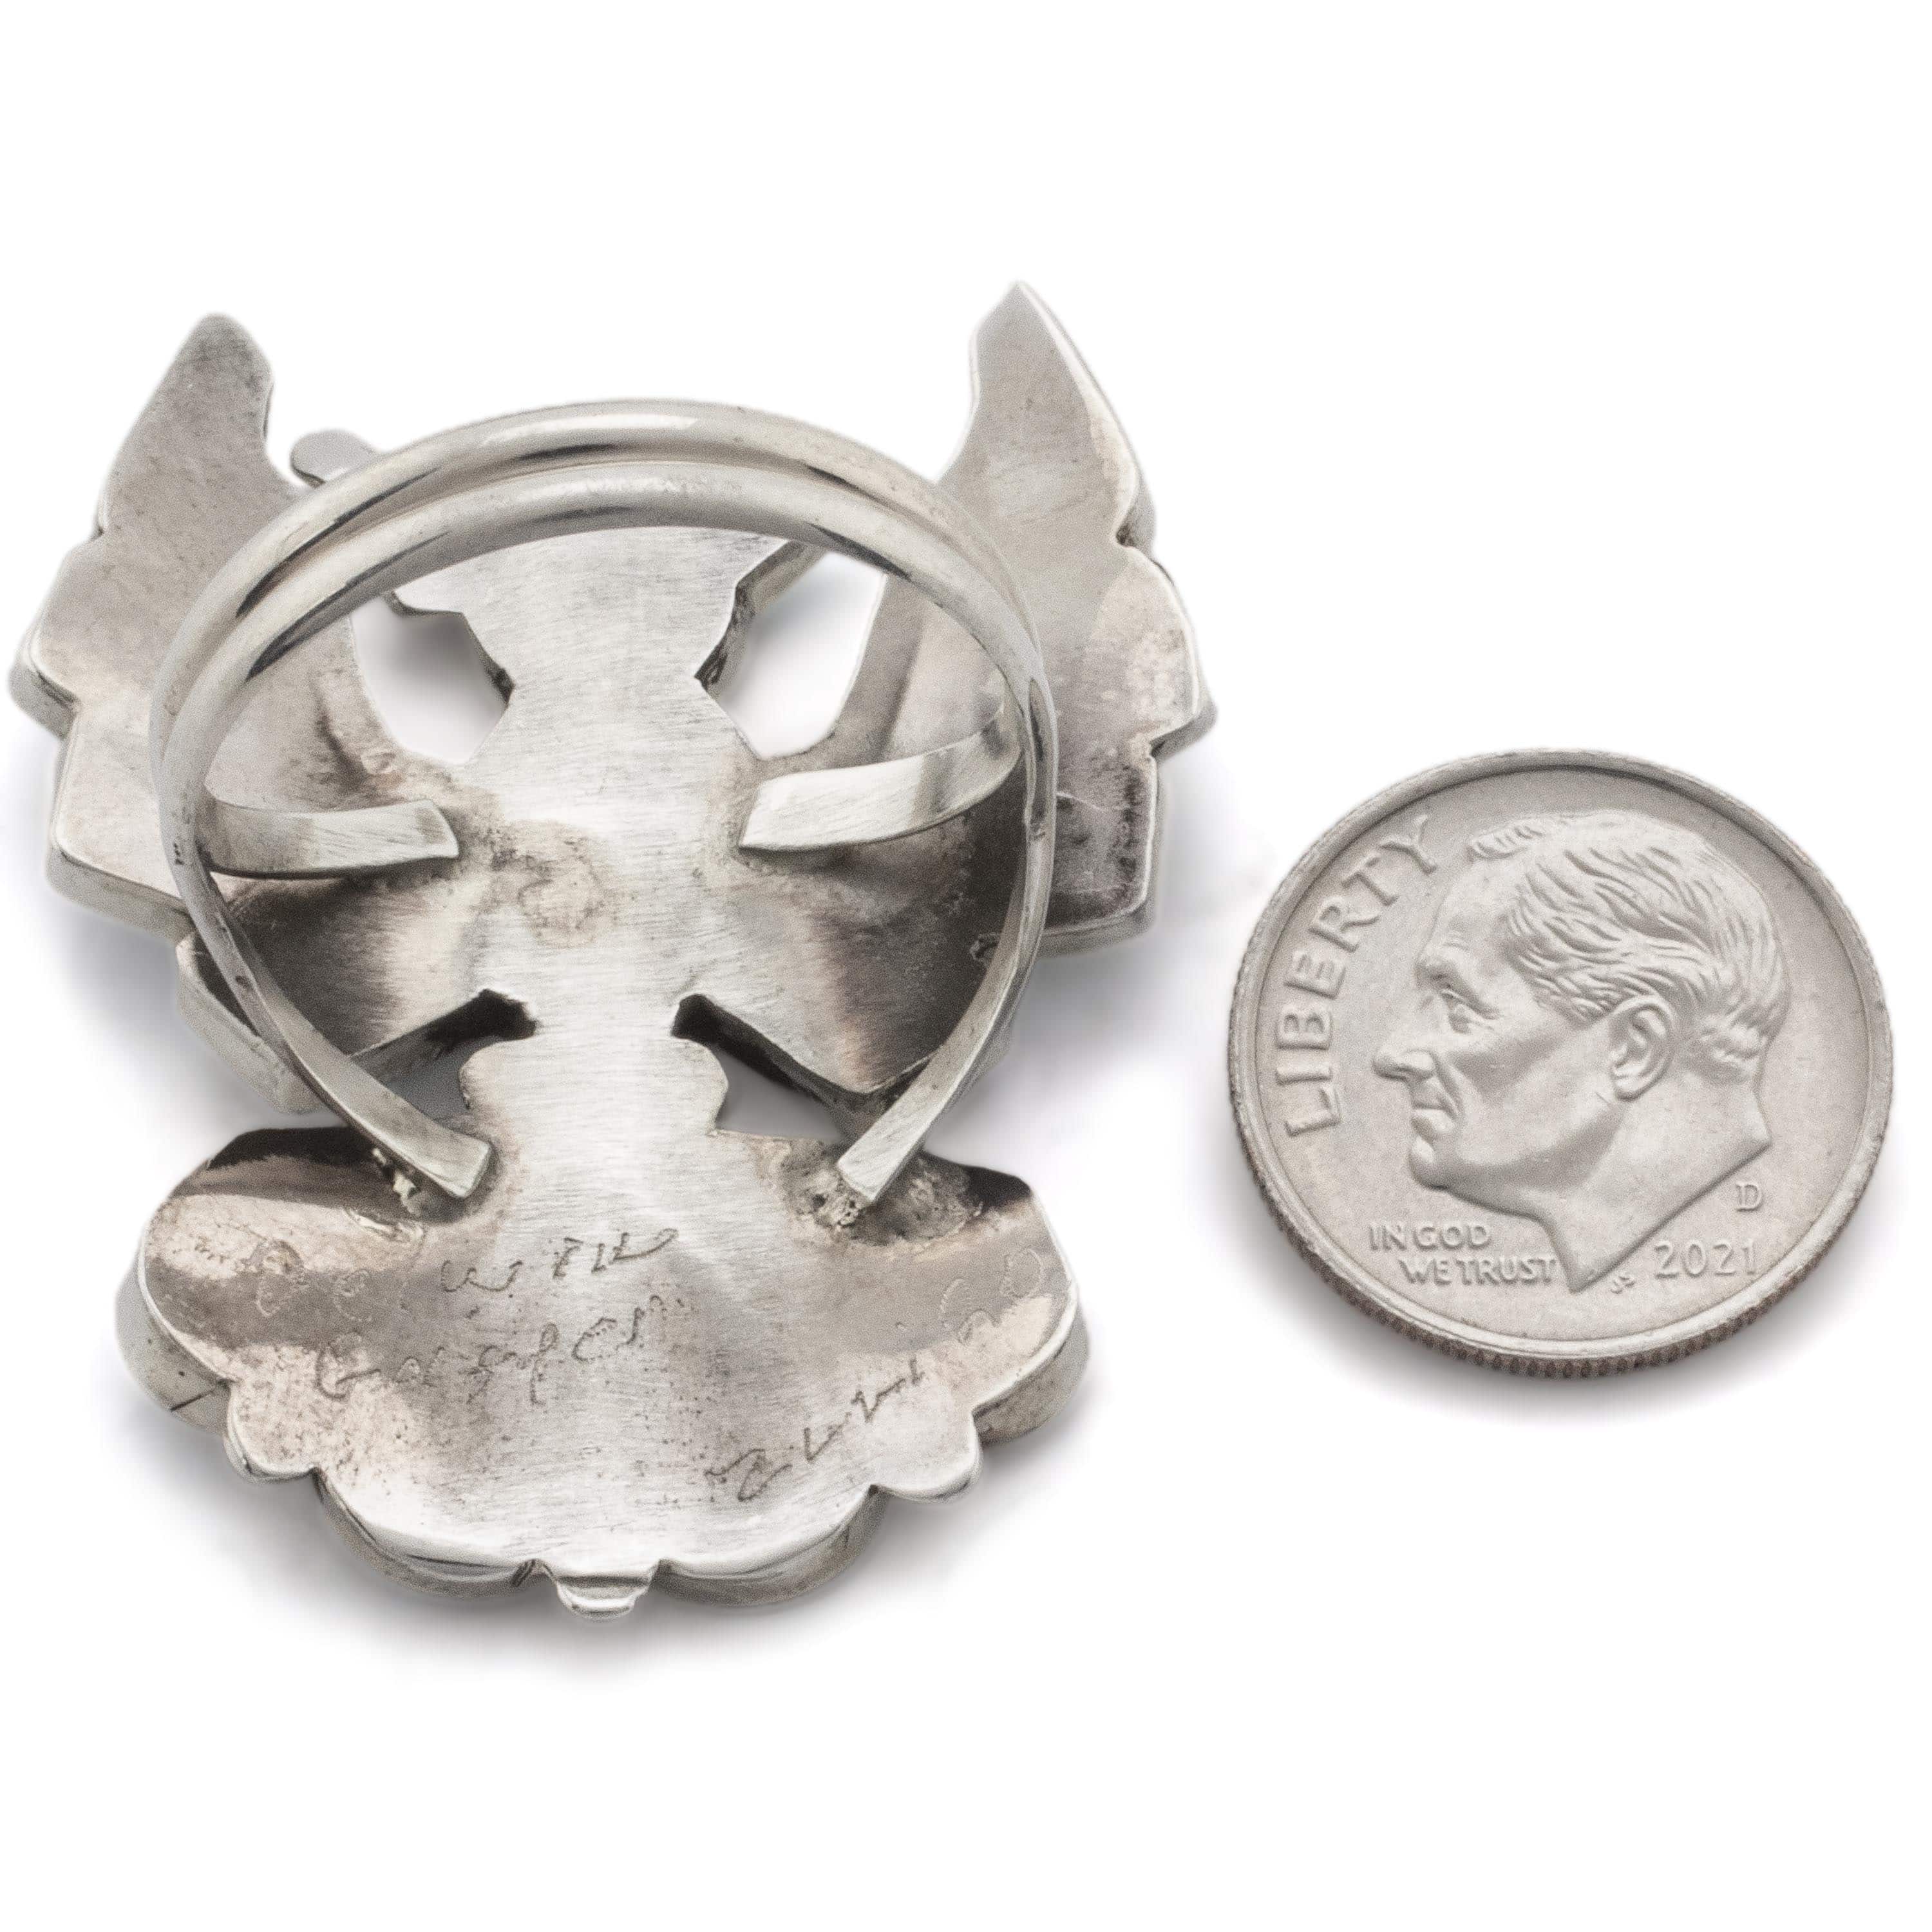 Delwin Gasper Zuni Thunderbird USA Native American Made 925 Sterling Silver  Ring